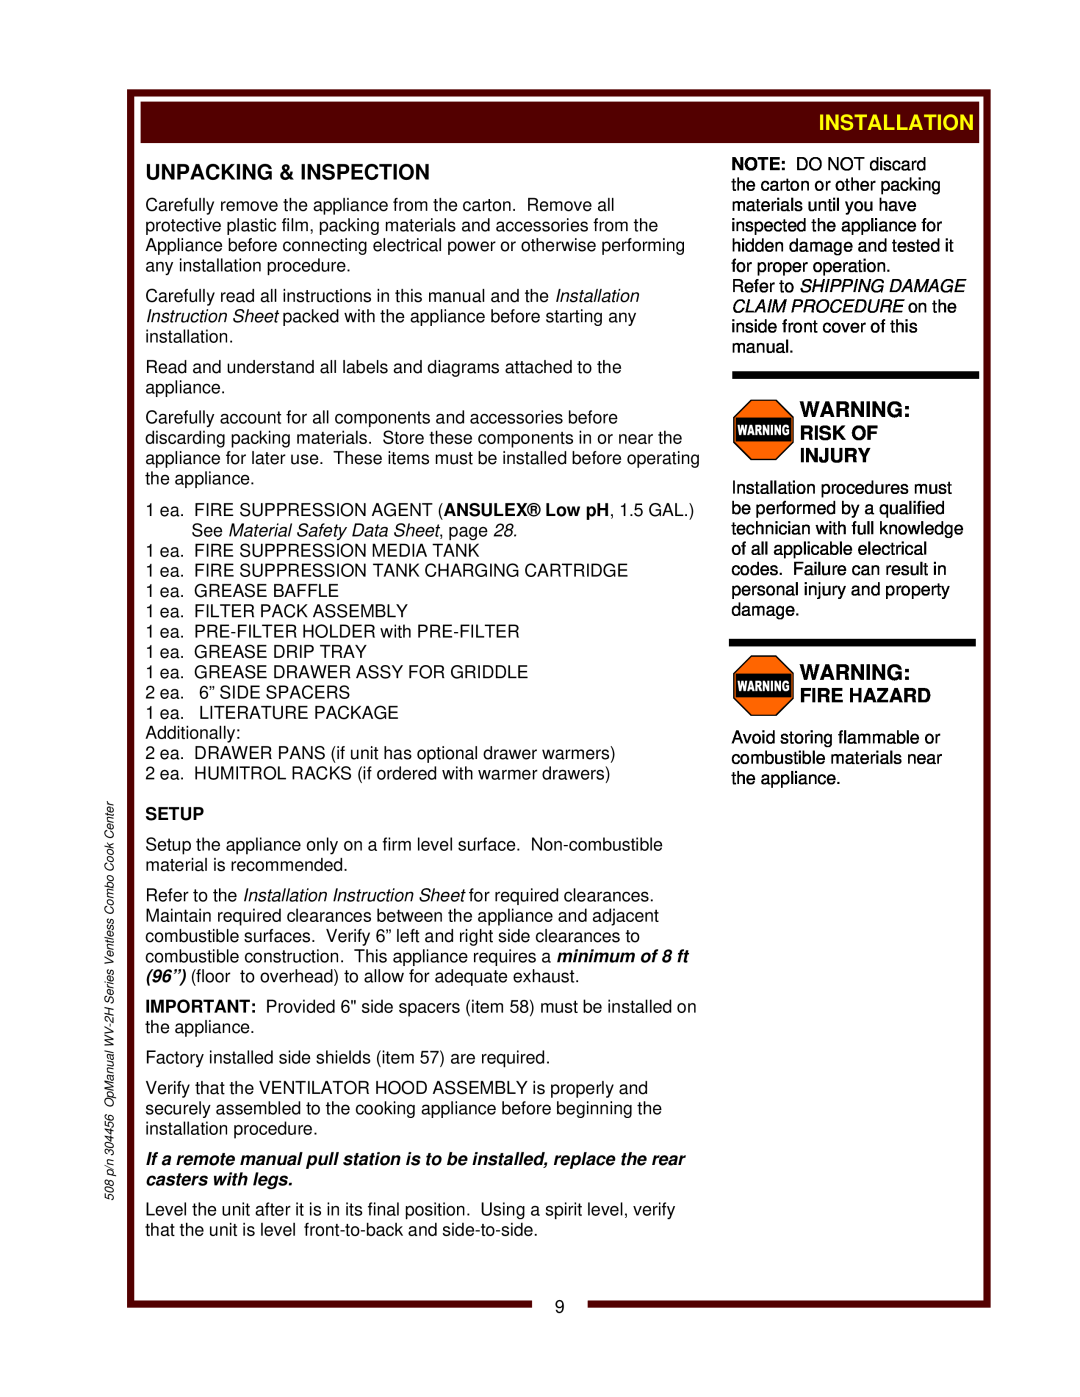 Bloomfield WV-2HSGRWT, WV-2HFGRWT operation manual Unpacking & Inspection, Installation, Risk Of Injury, Fire Hazard 